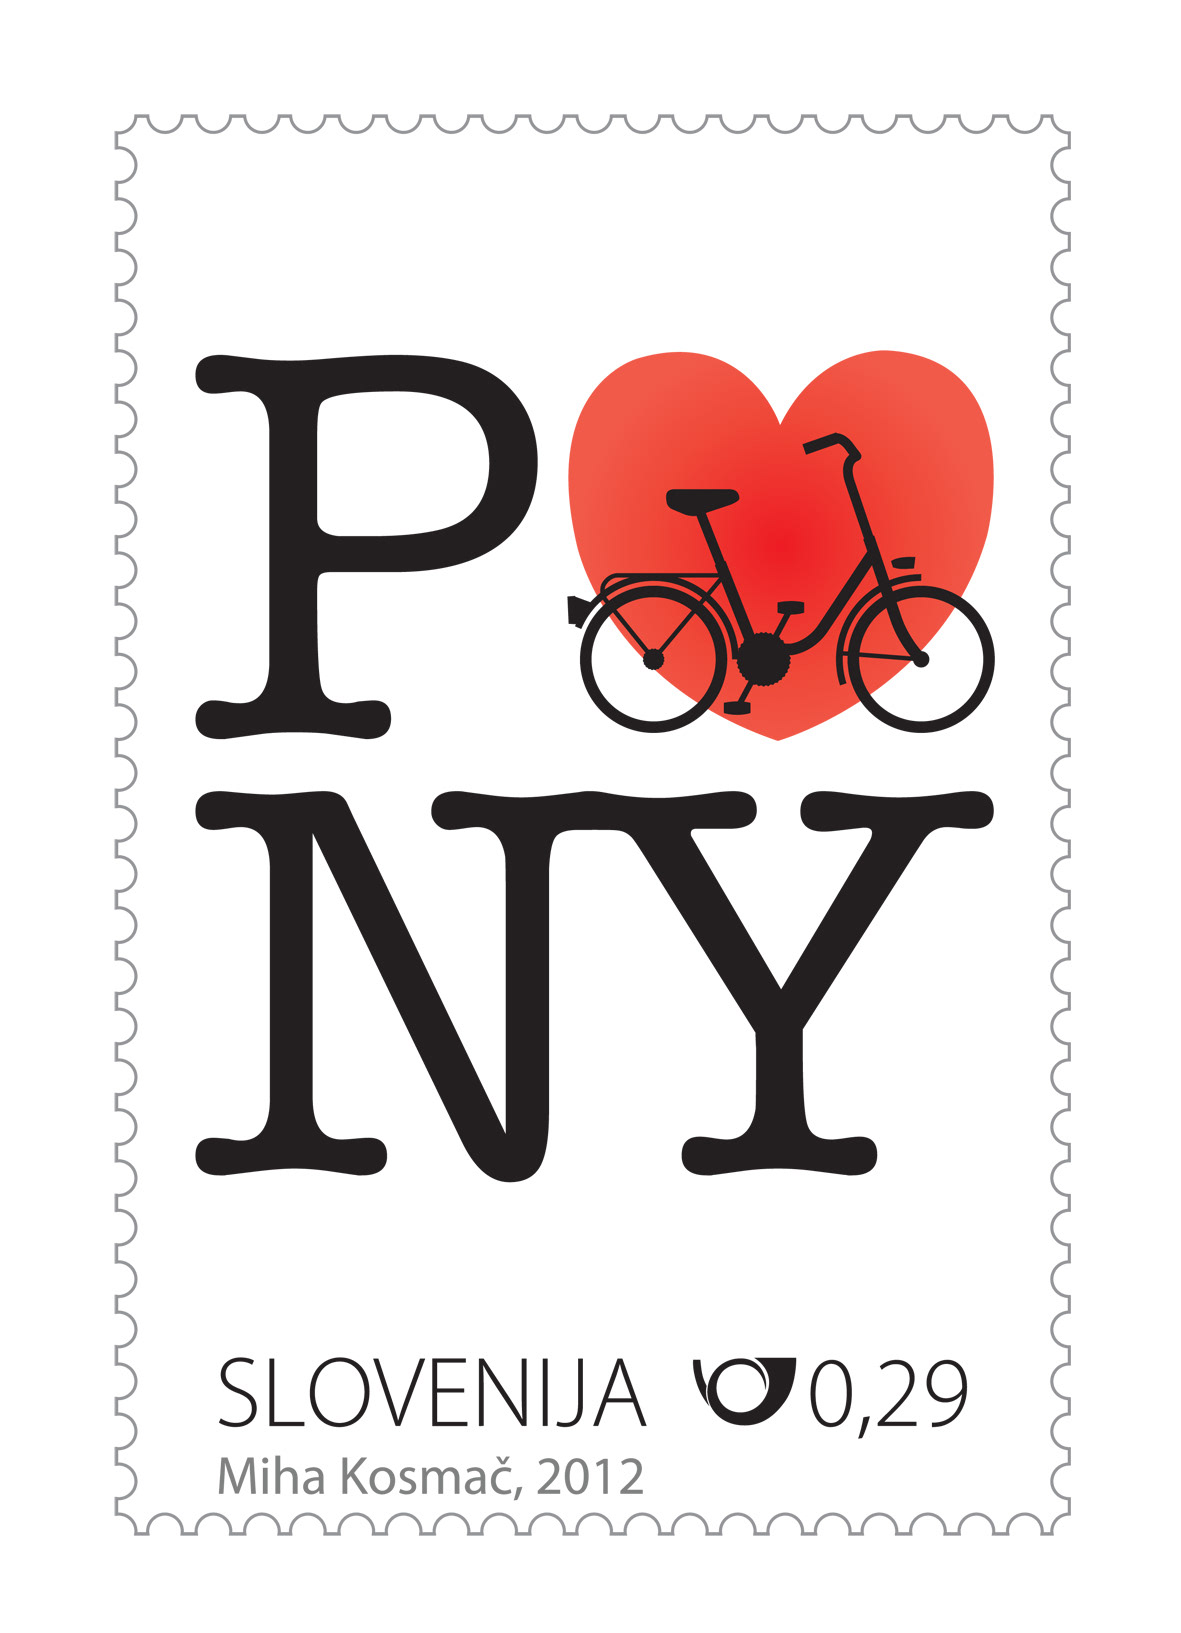 miha  kosmač post stamp slovenia Love pendant pony Bike new year